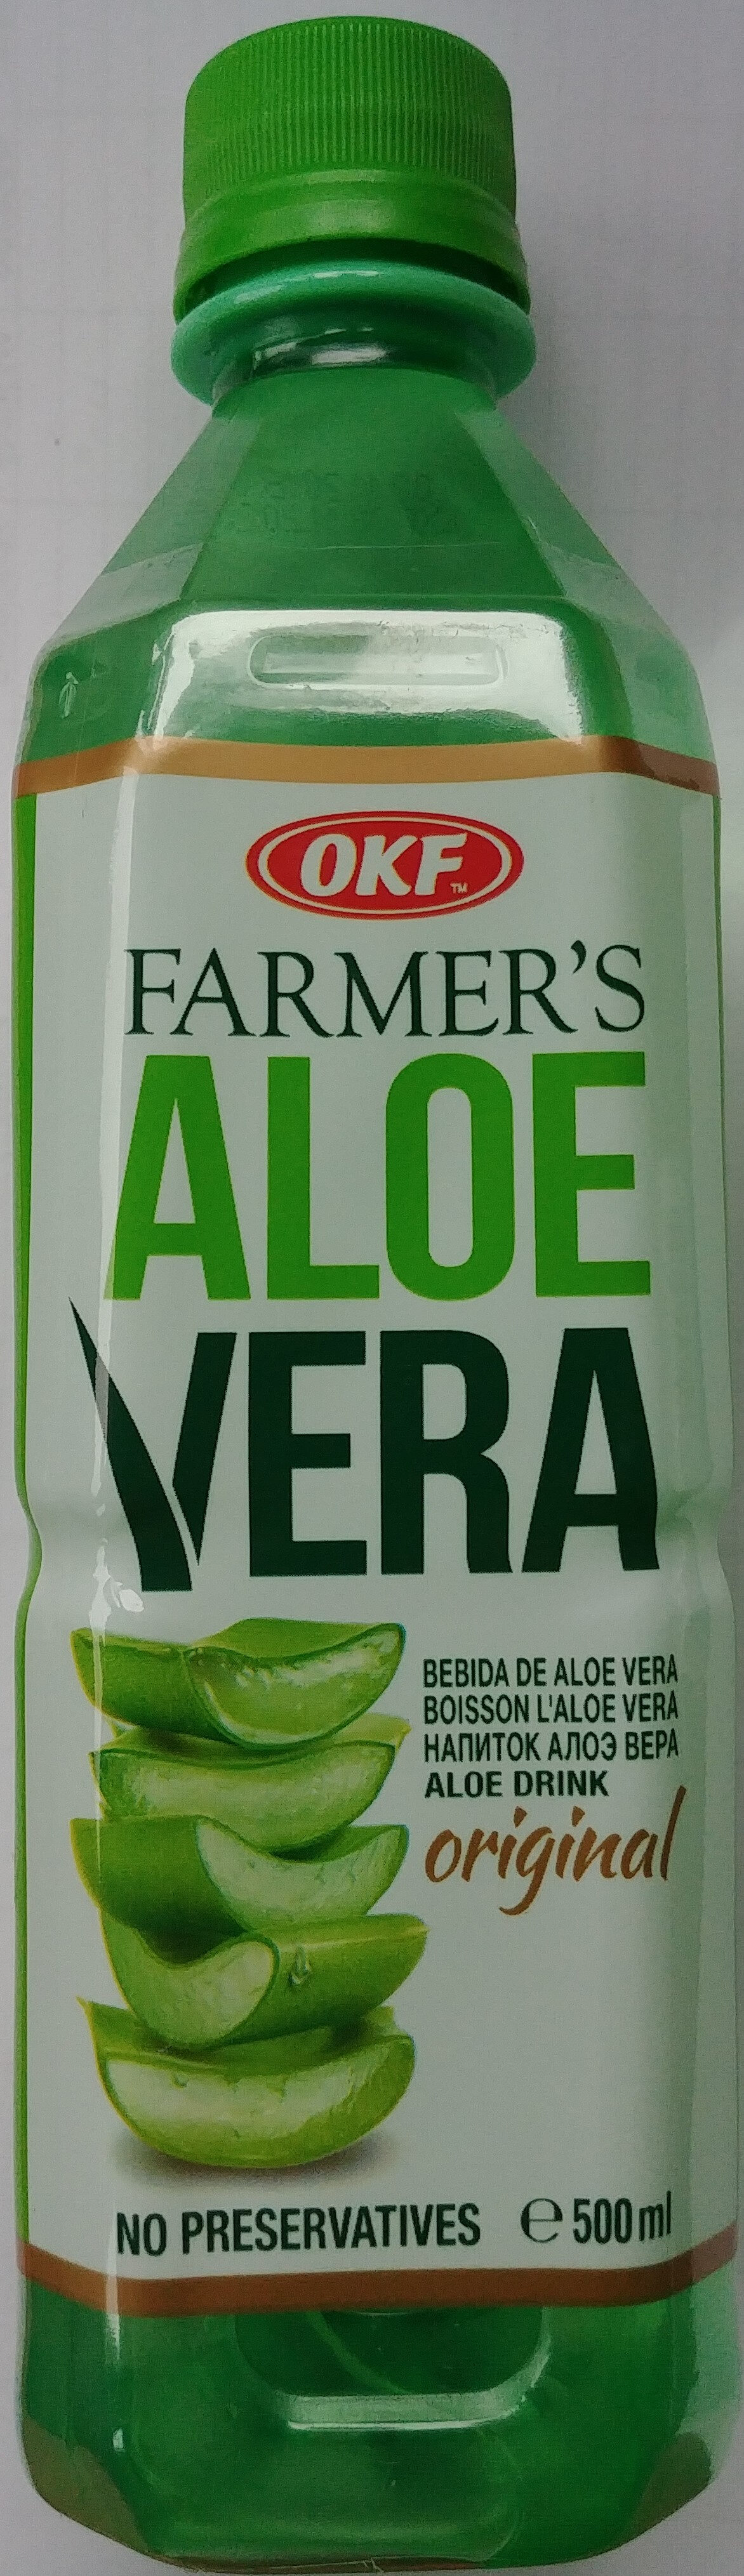 Napój Farmer's Aloe Vera - Produkt